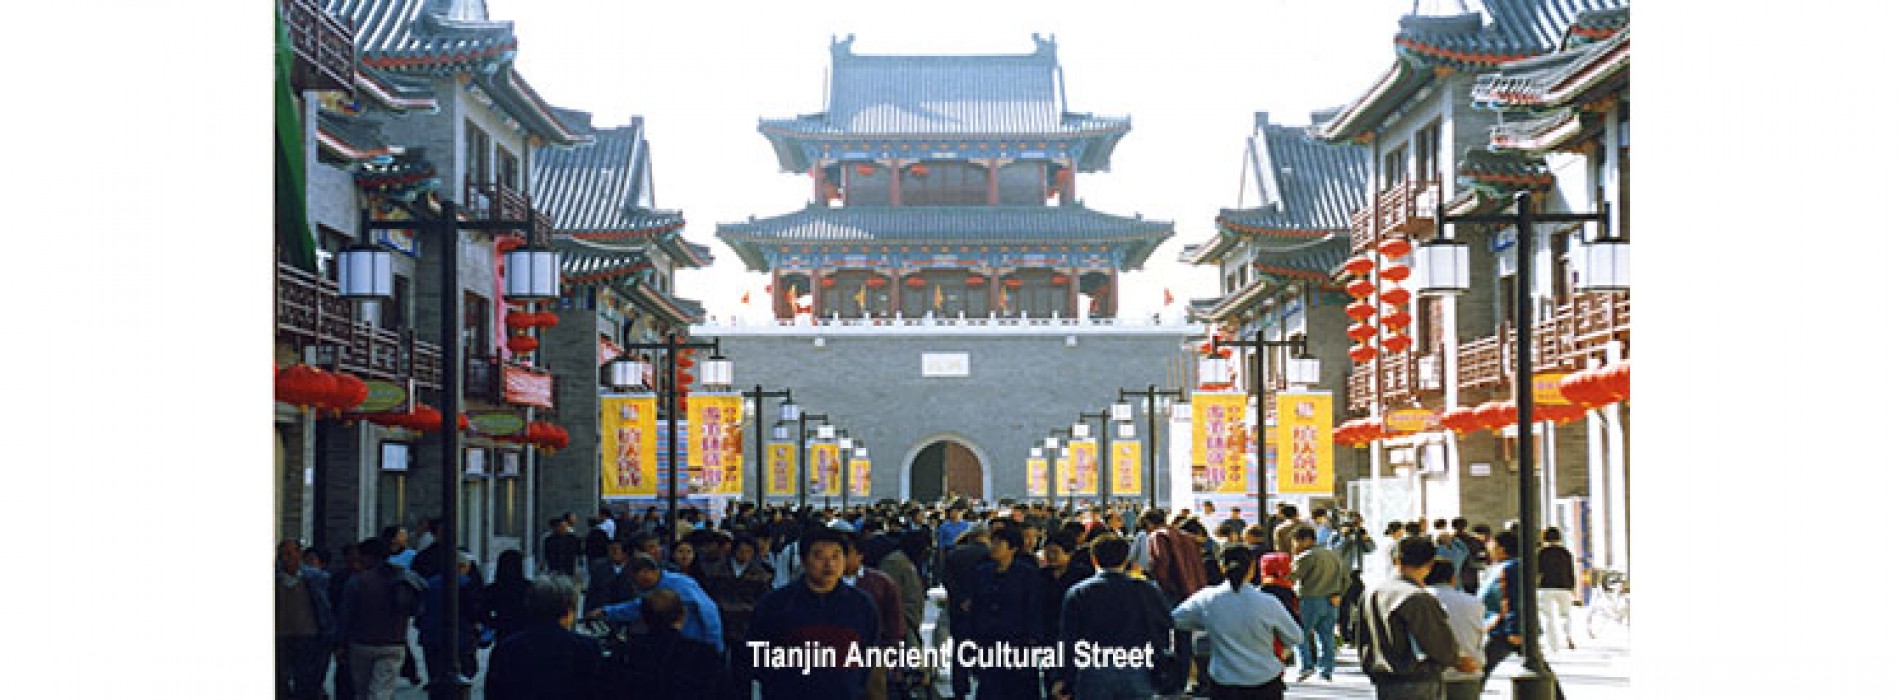 Tianjin, a beautiful port city awaits your arrival